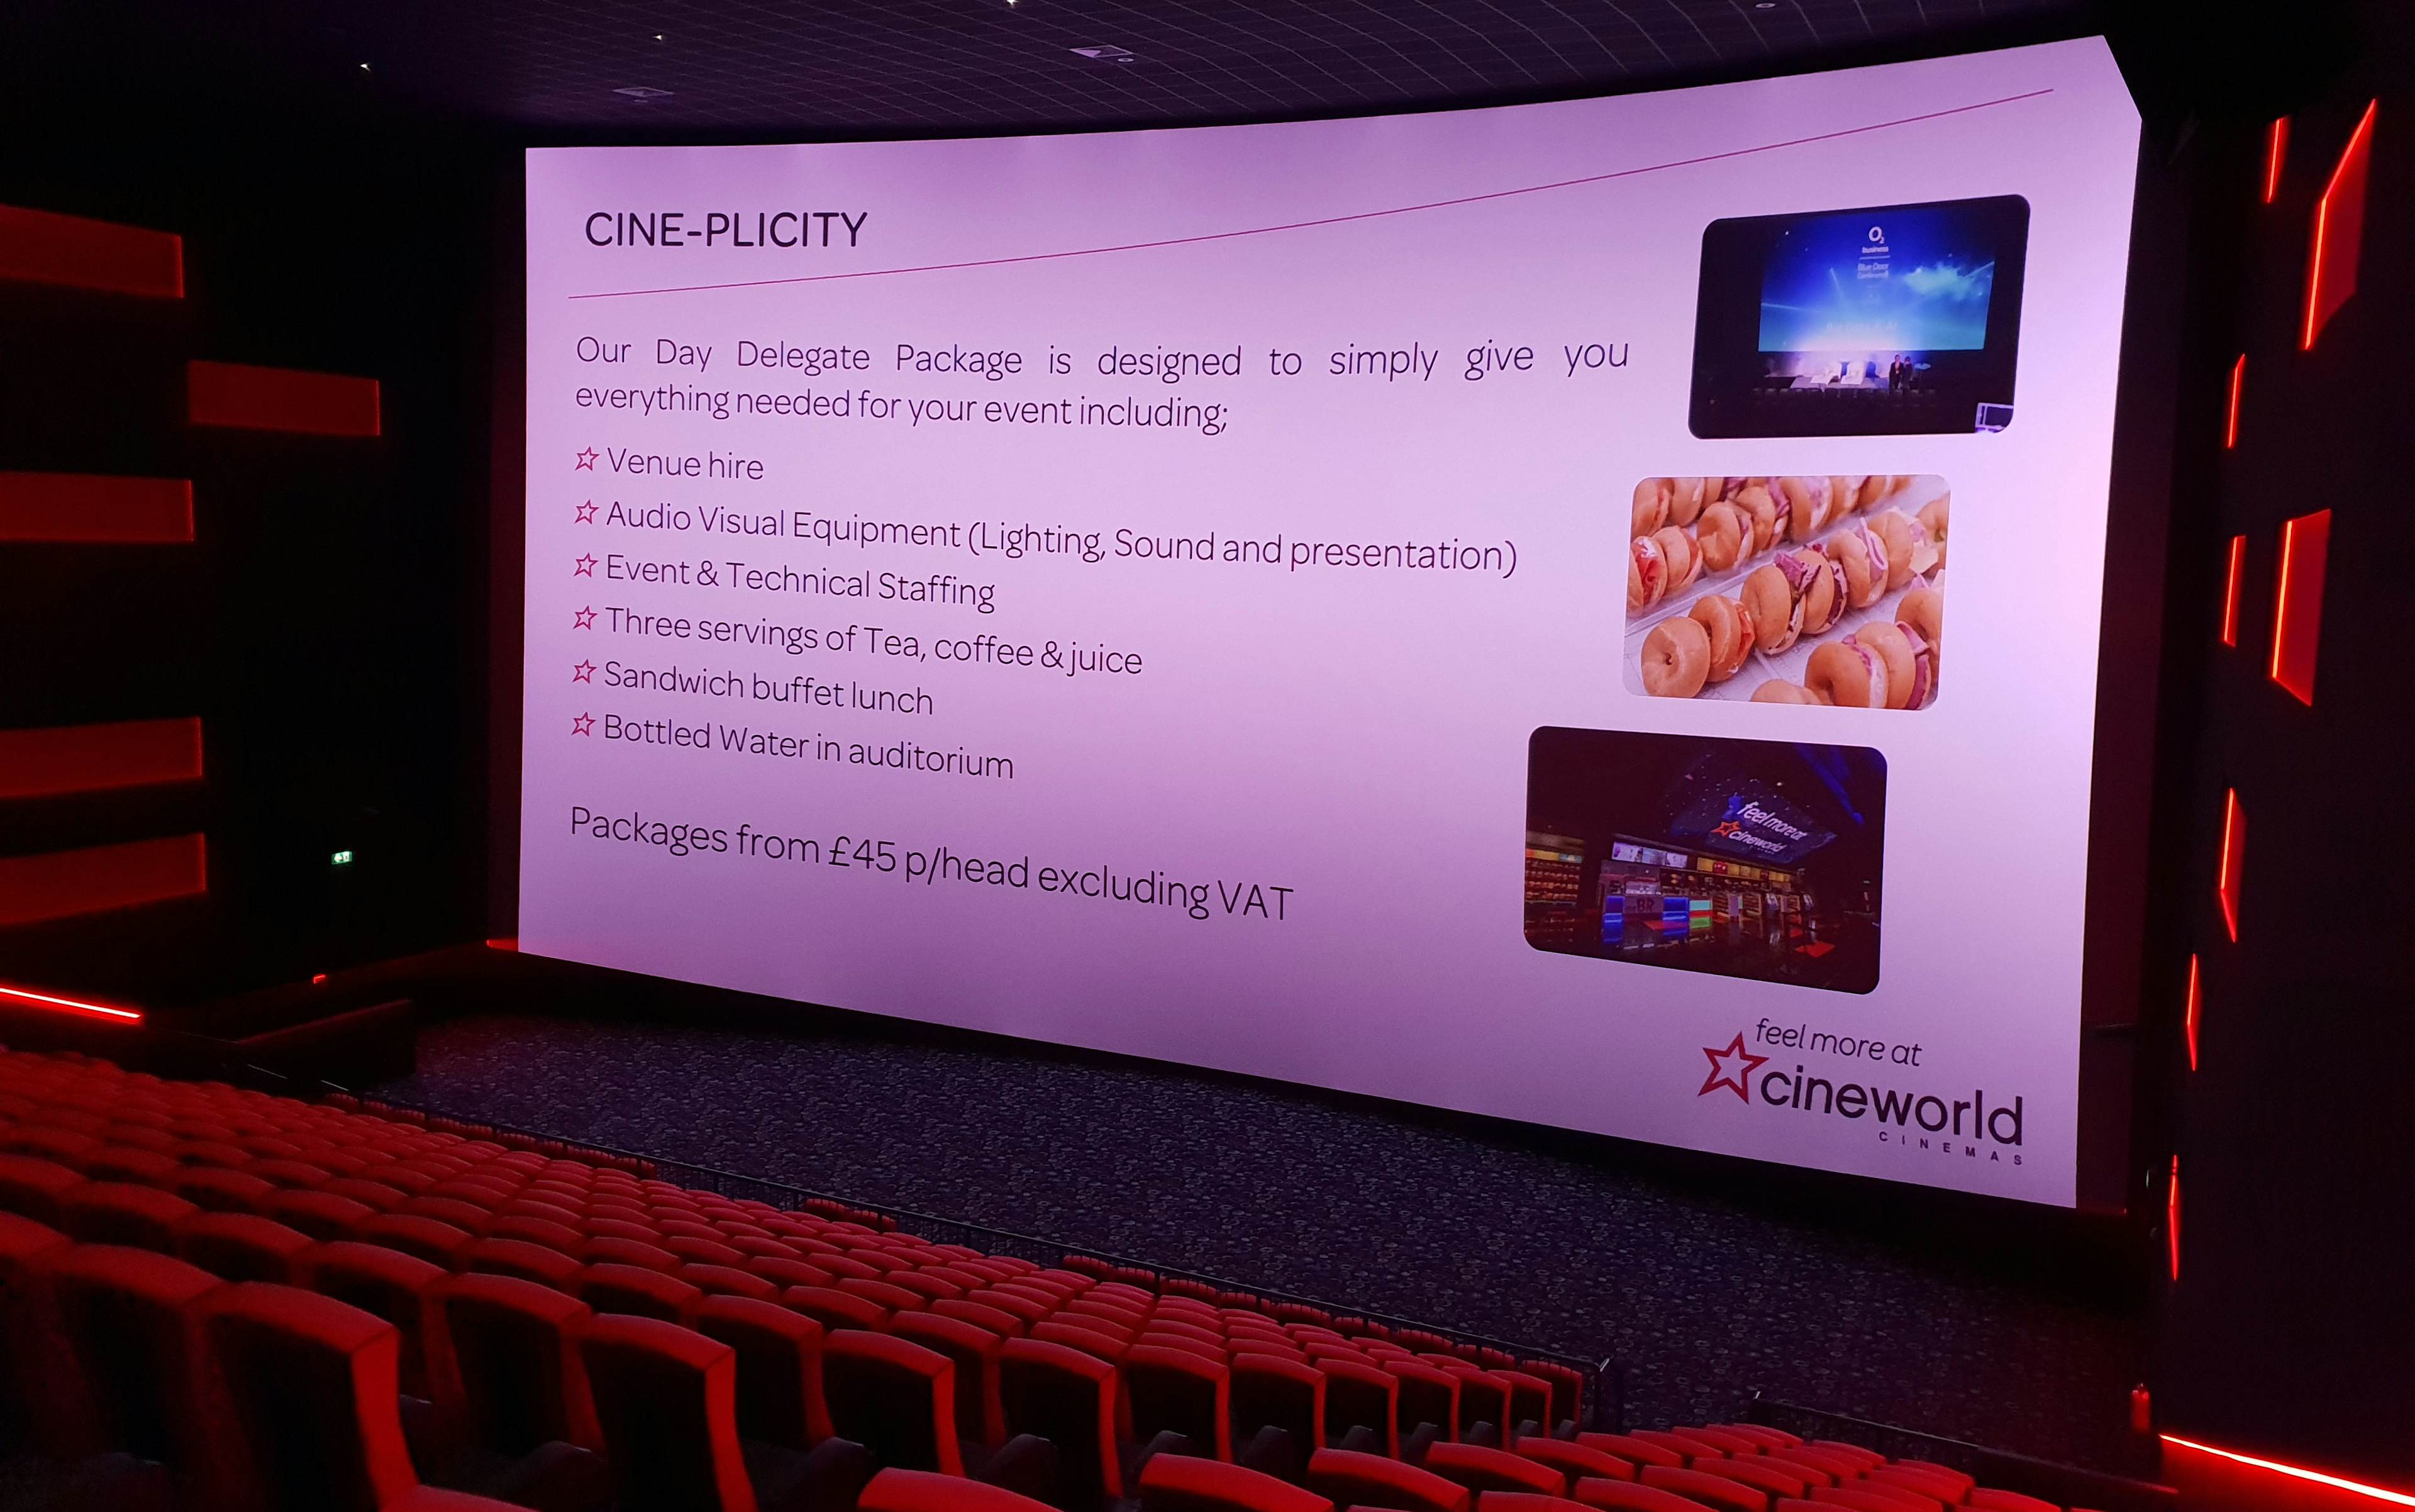 Cineworld Watford - image 1